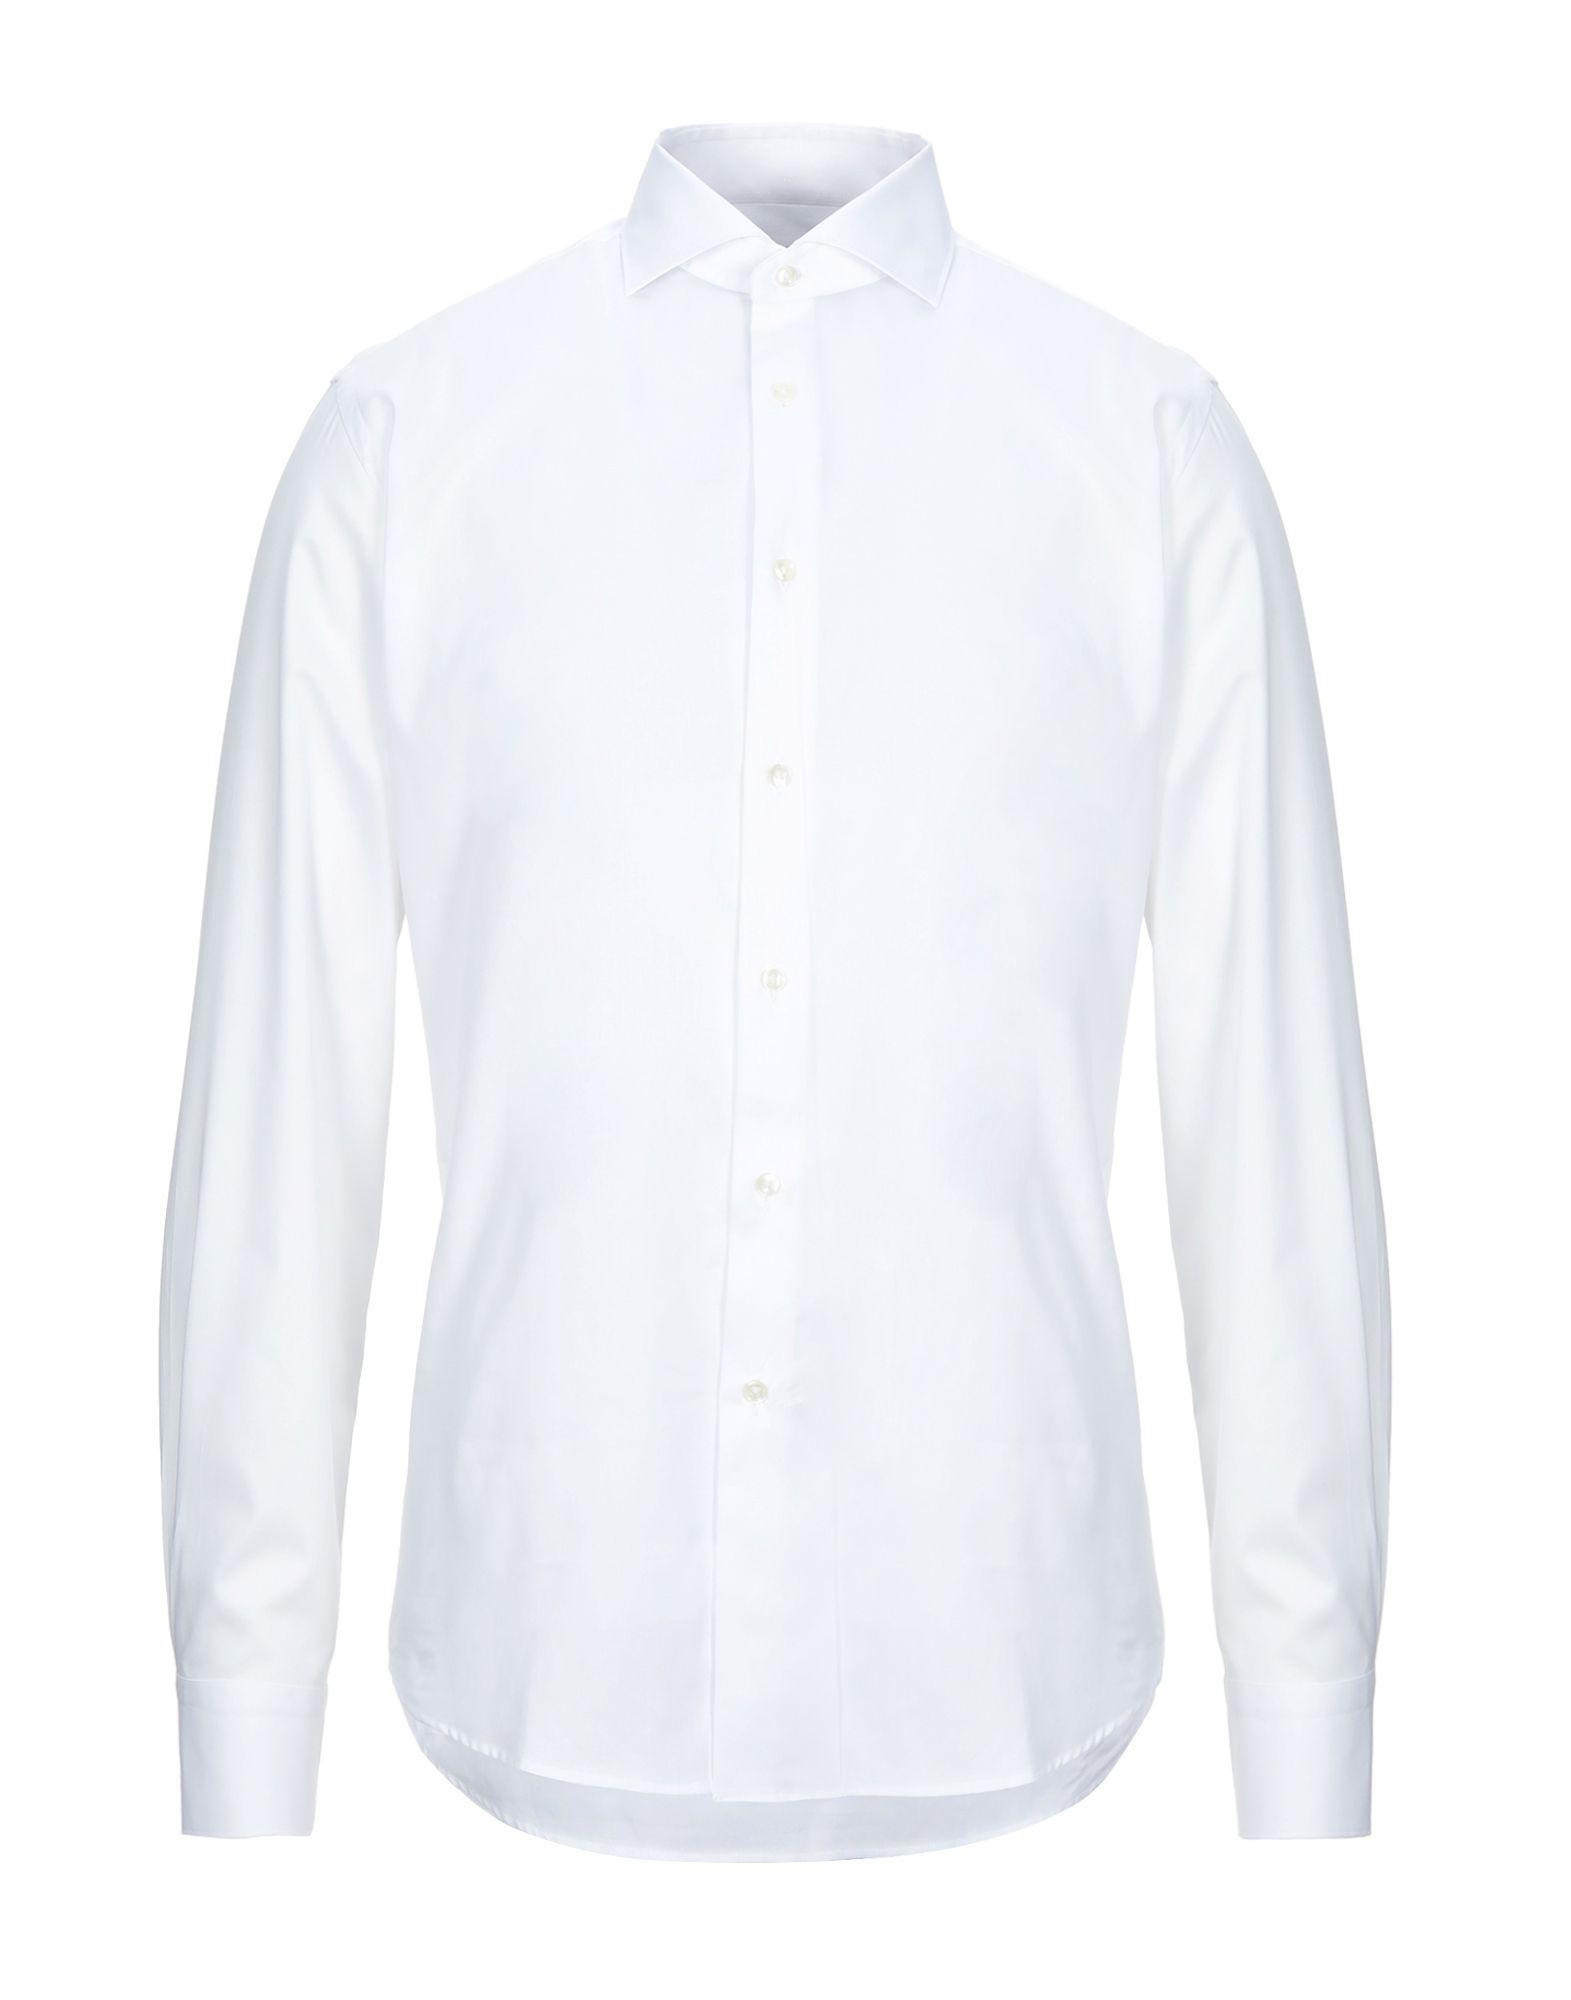 Zanetti 1965 Cotton Shirt in White for Men - Lyst